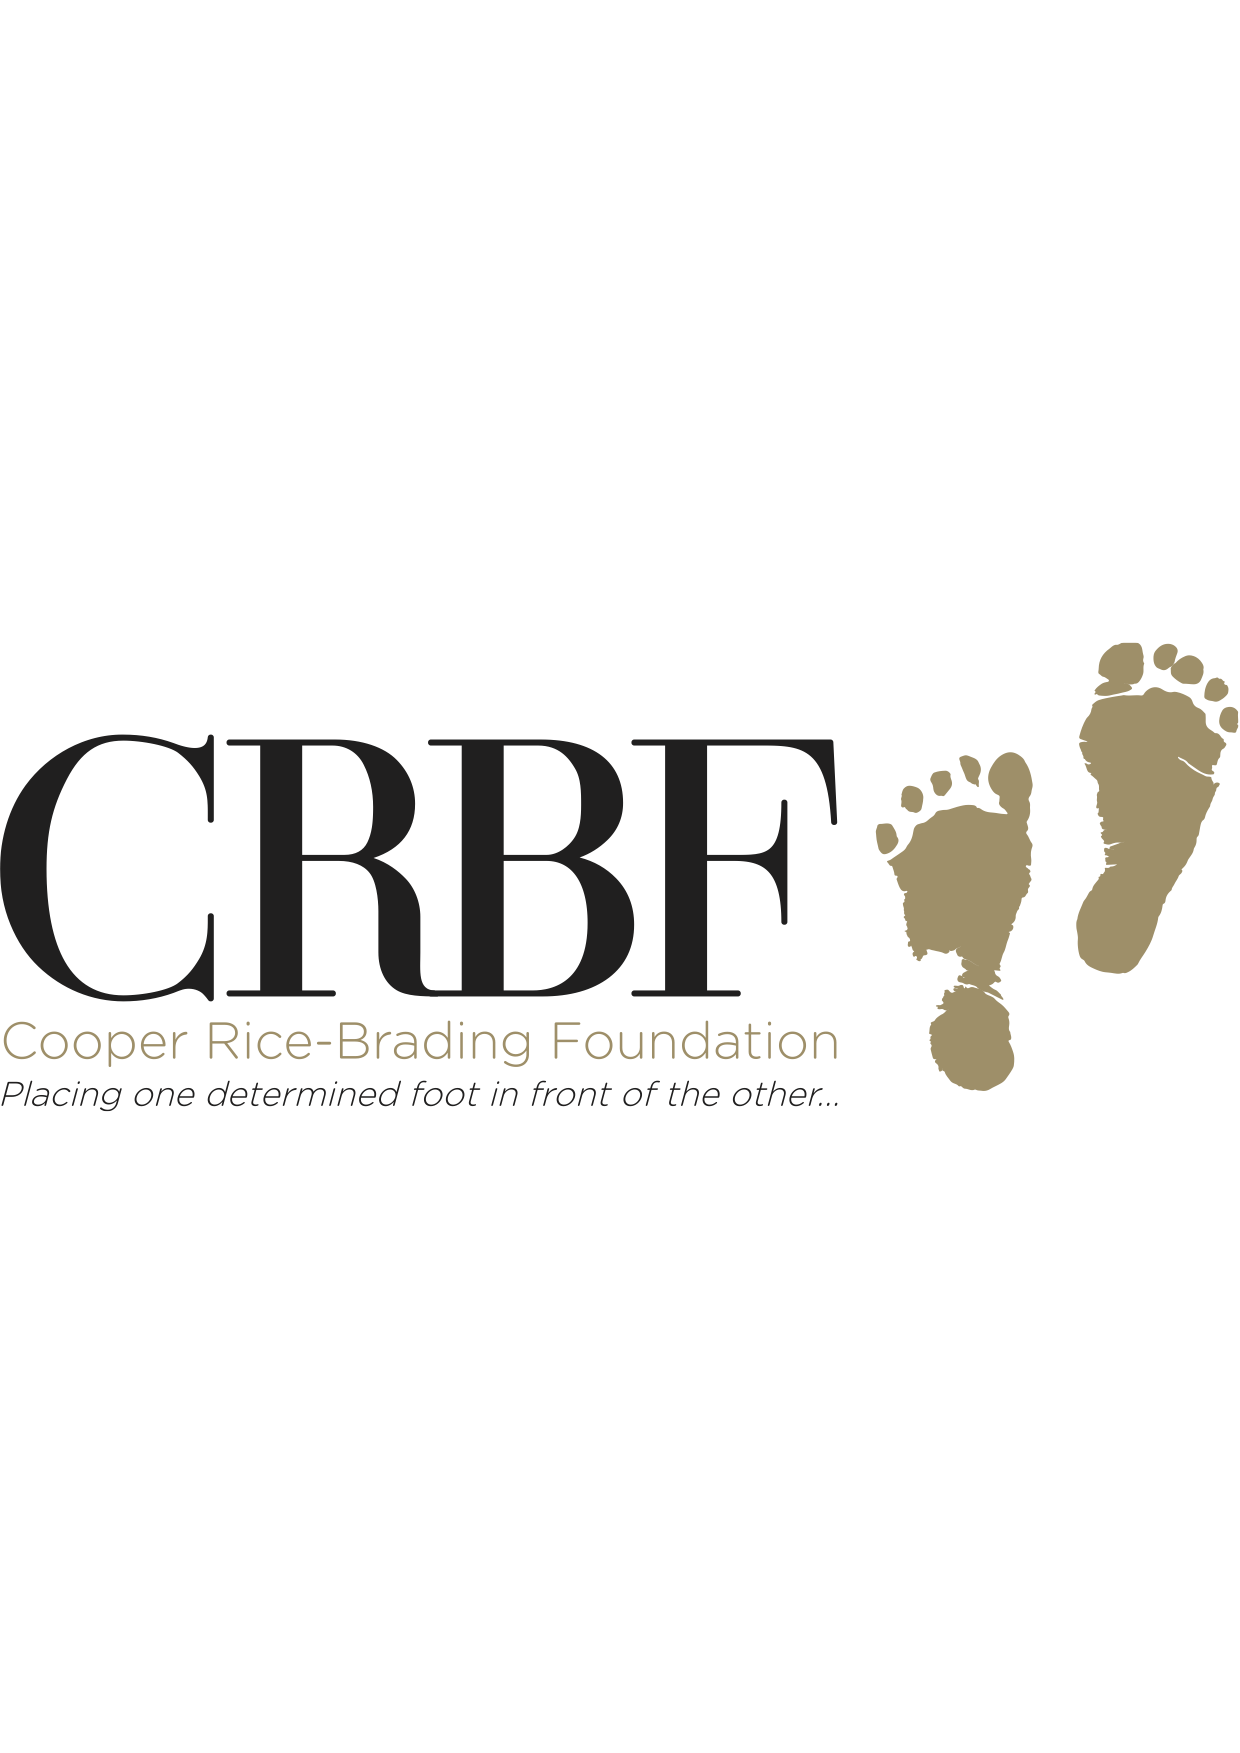 Cooper Rice-Brading Foundation logo